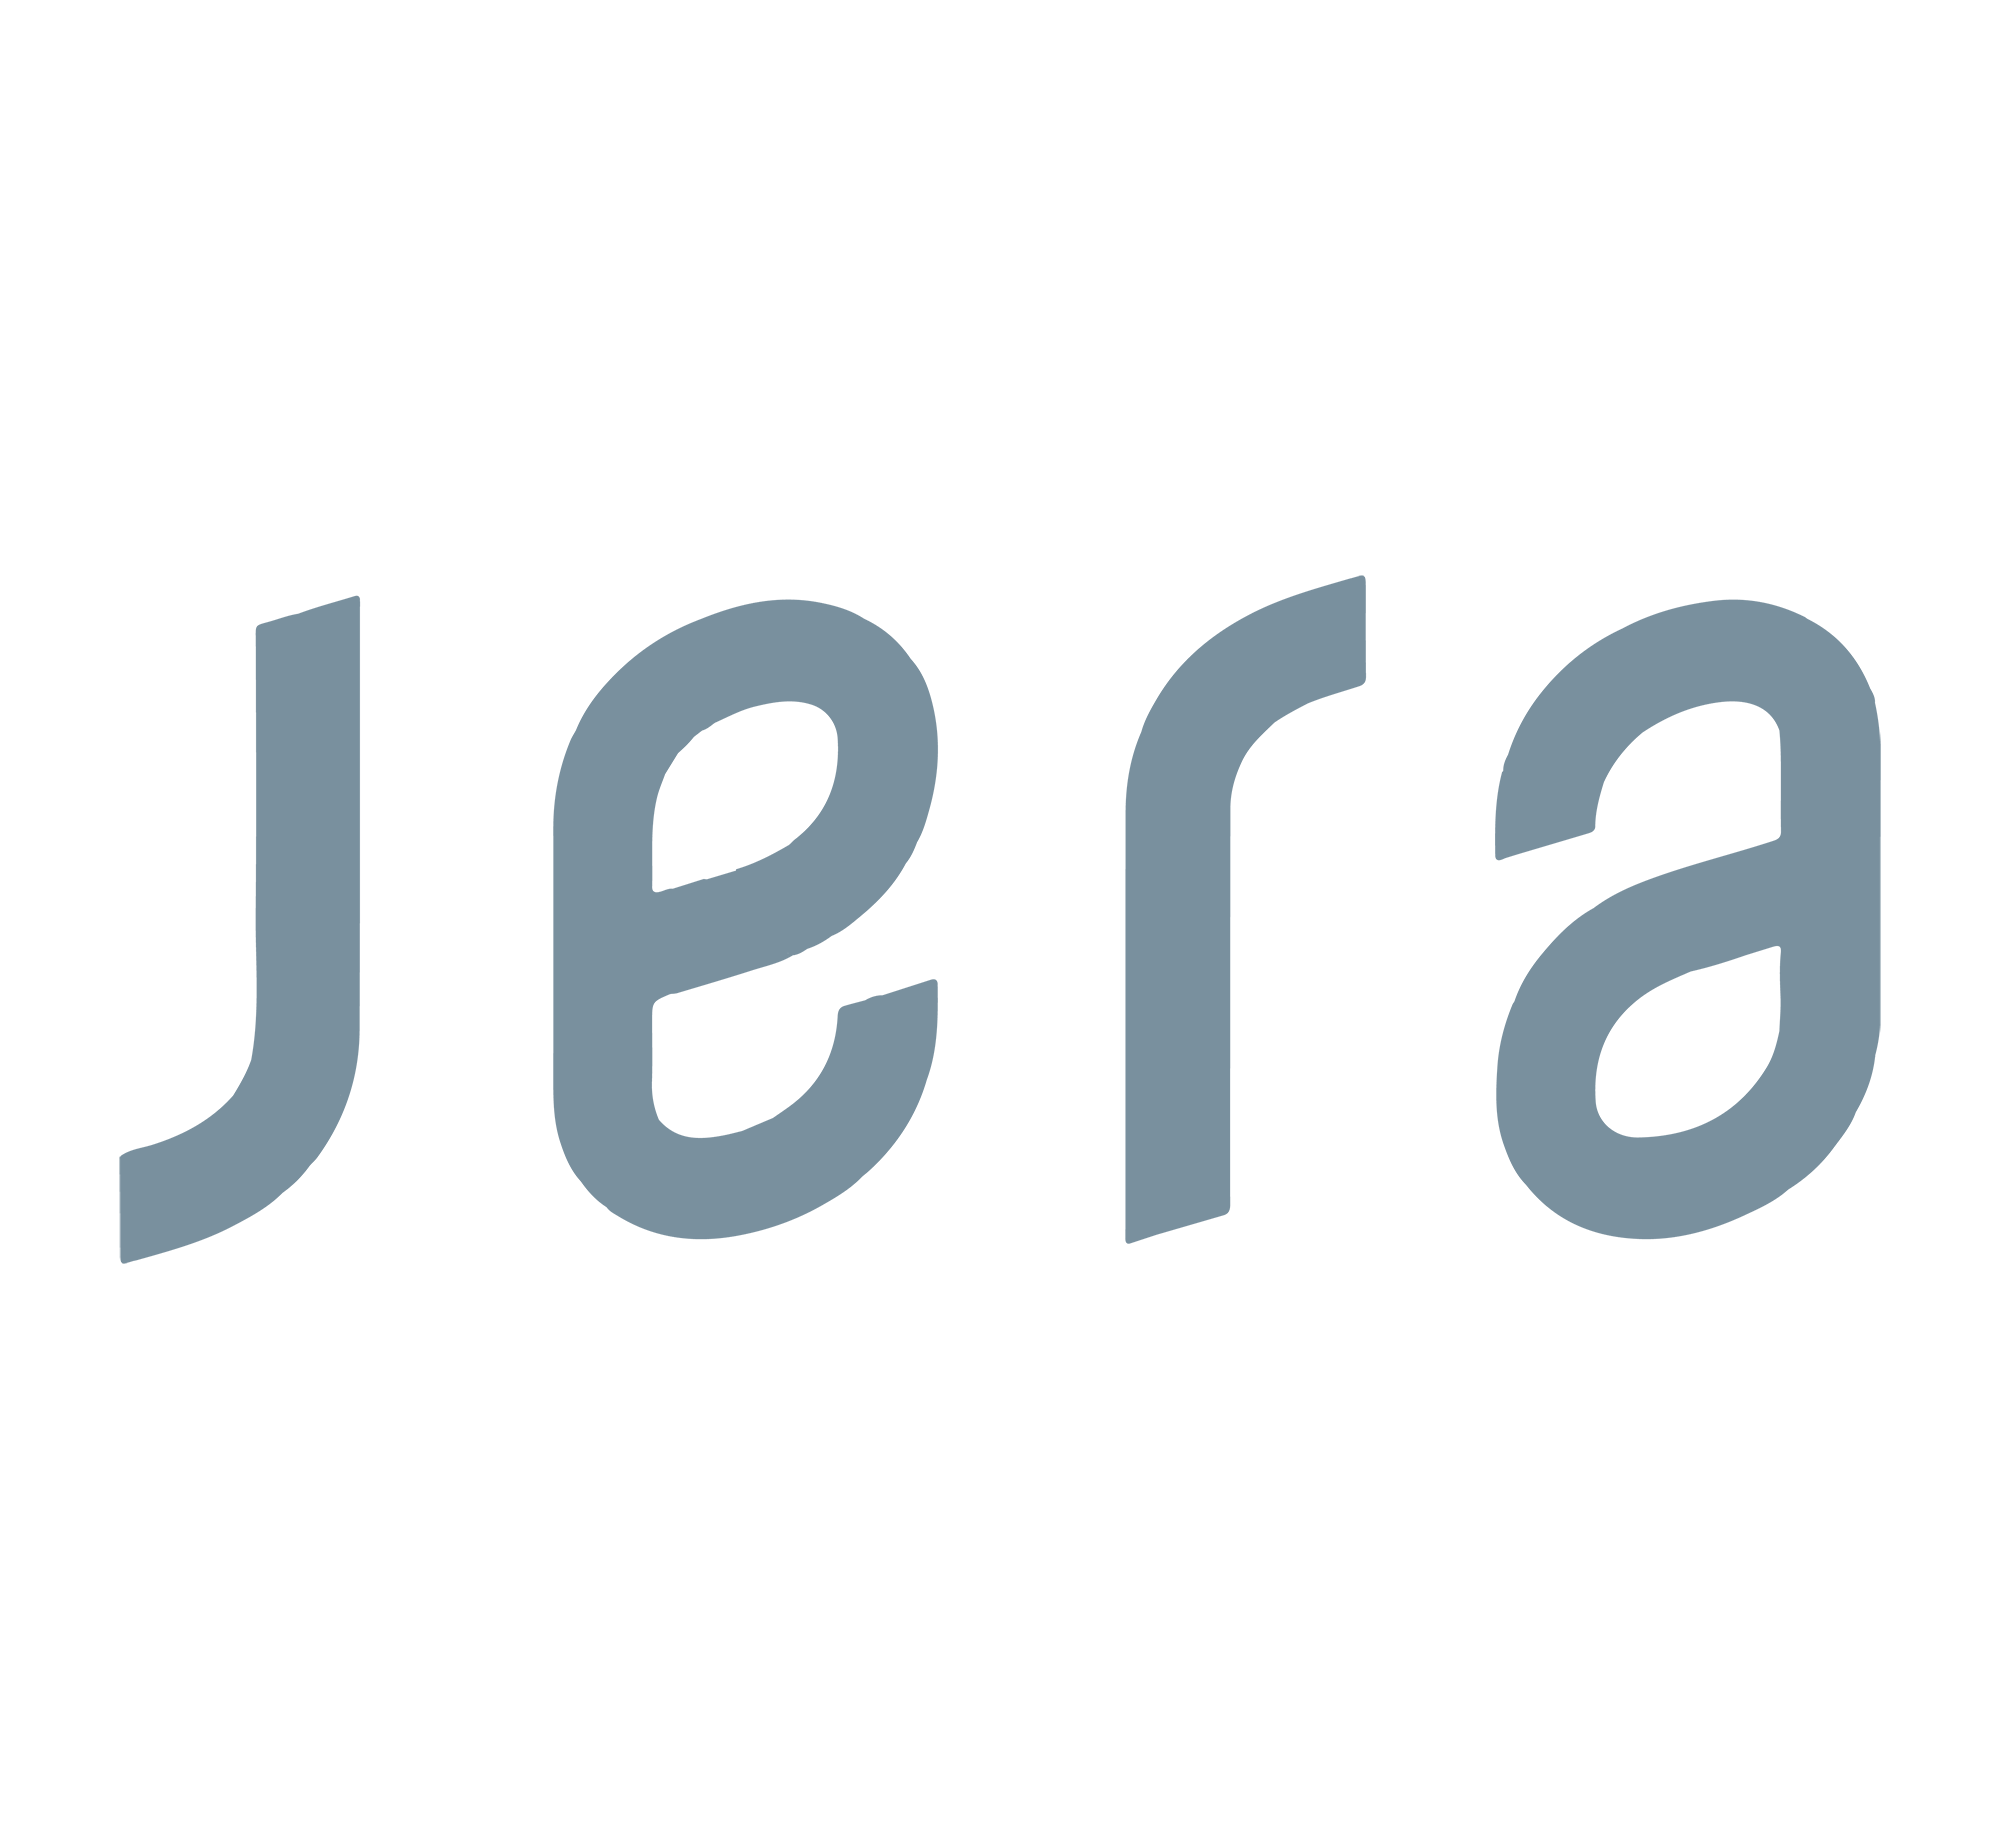 JERA Co., Inc.